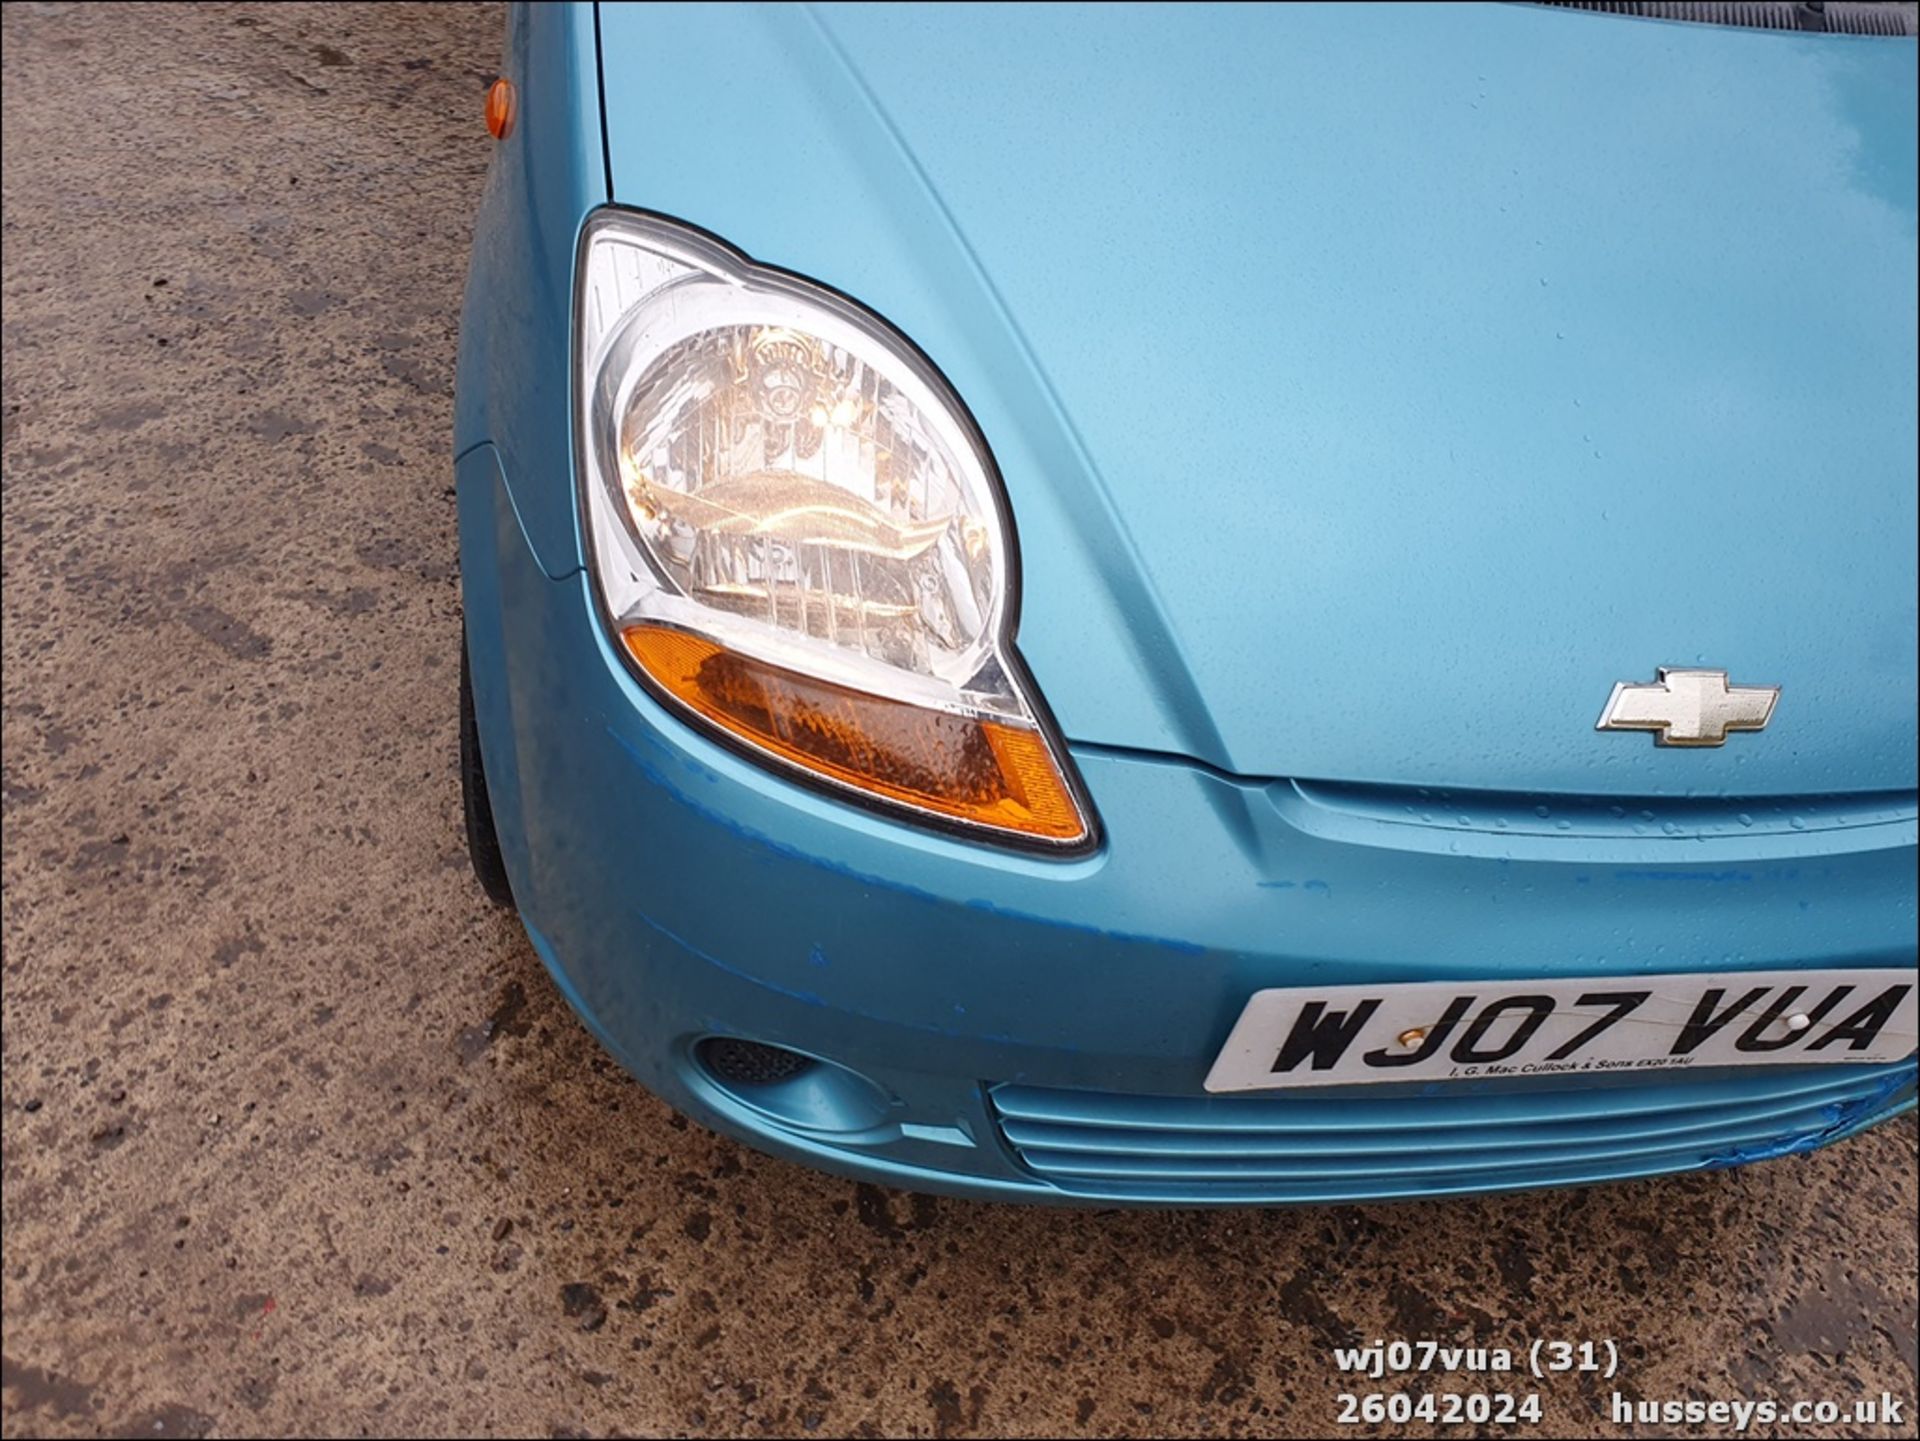 07/07 CHEVROLET MATIZ SE AUTO - 796cc 5dr Hatchback (Blue, 36k) - Image 32 of 56